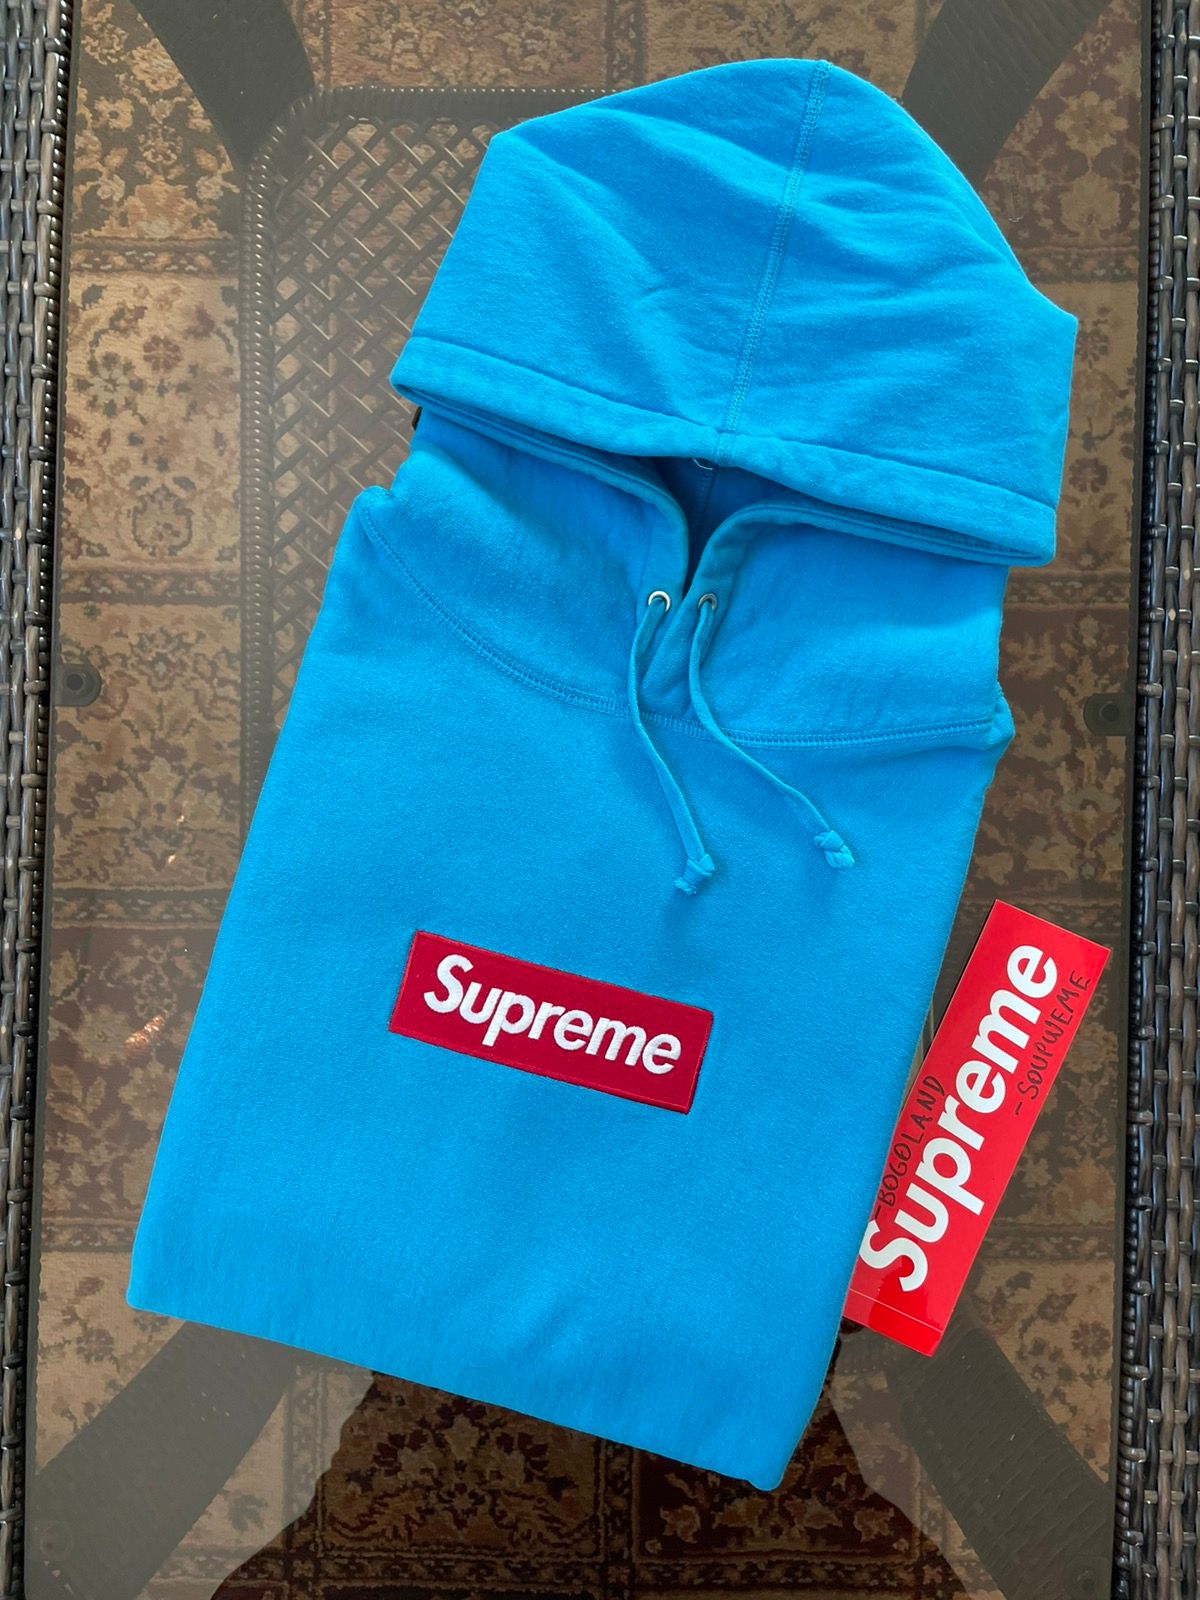 2009 Supreme Teal Blue Box Logo Hoodie